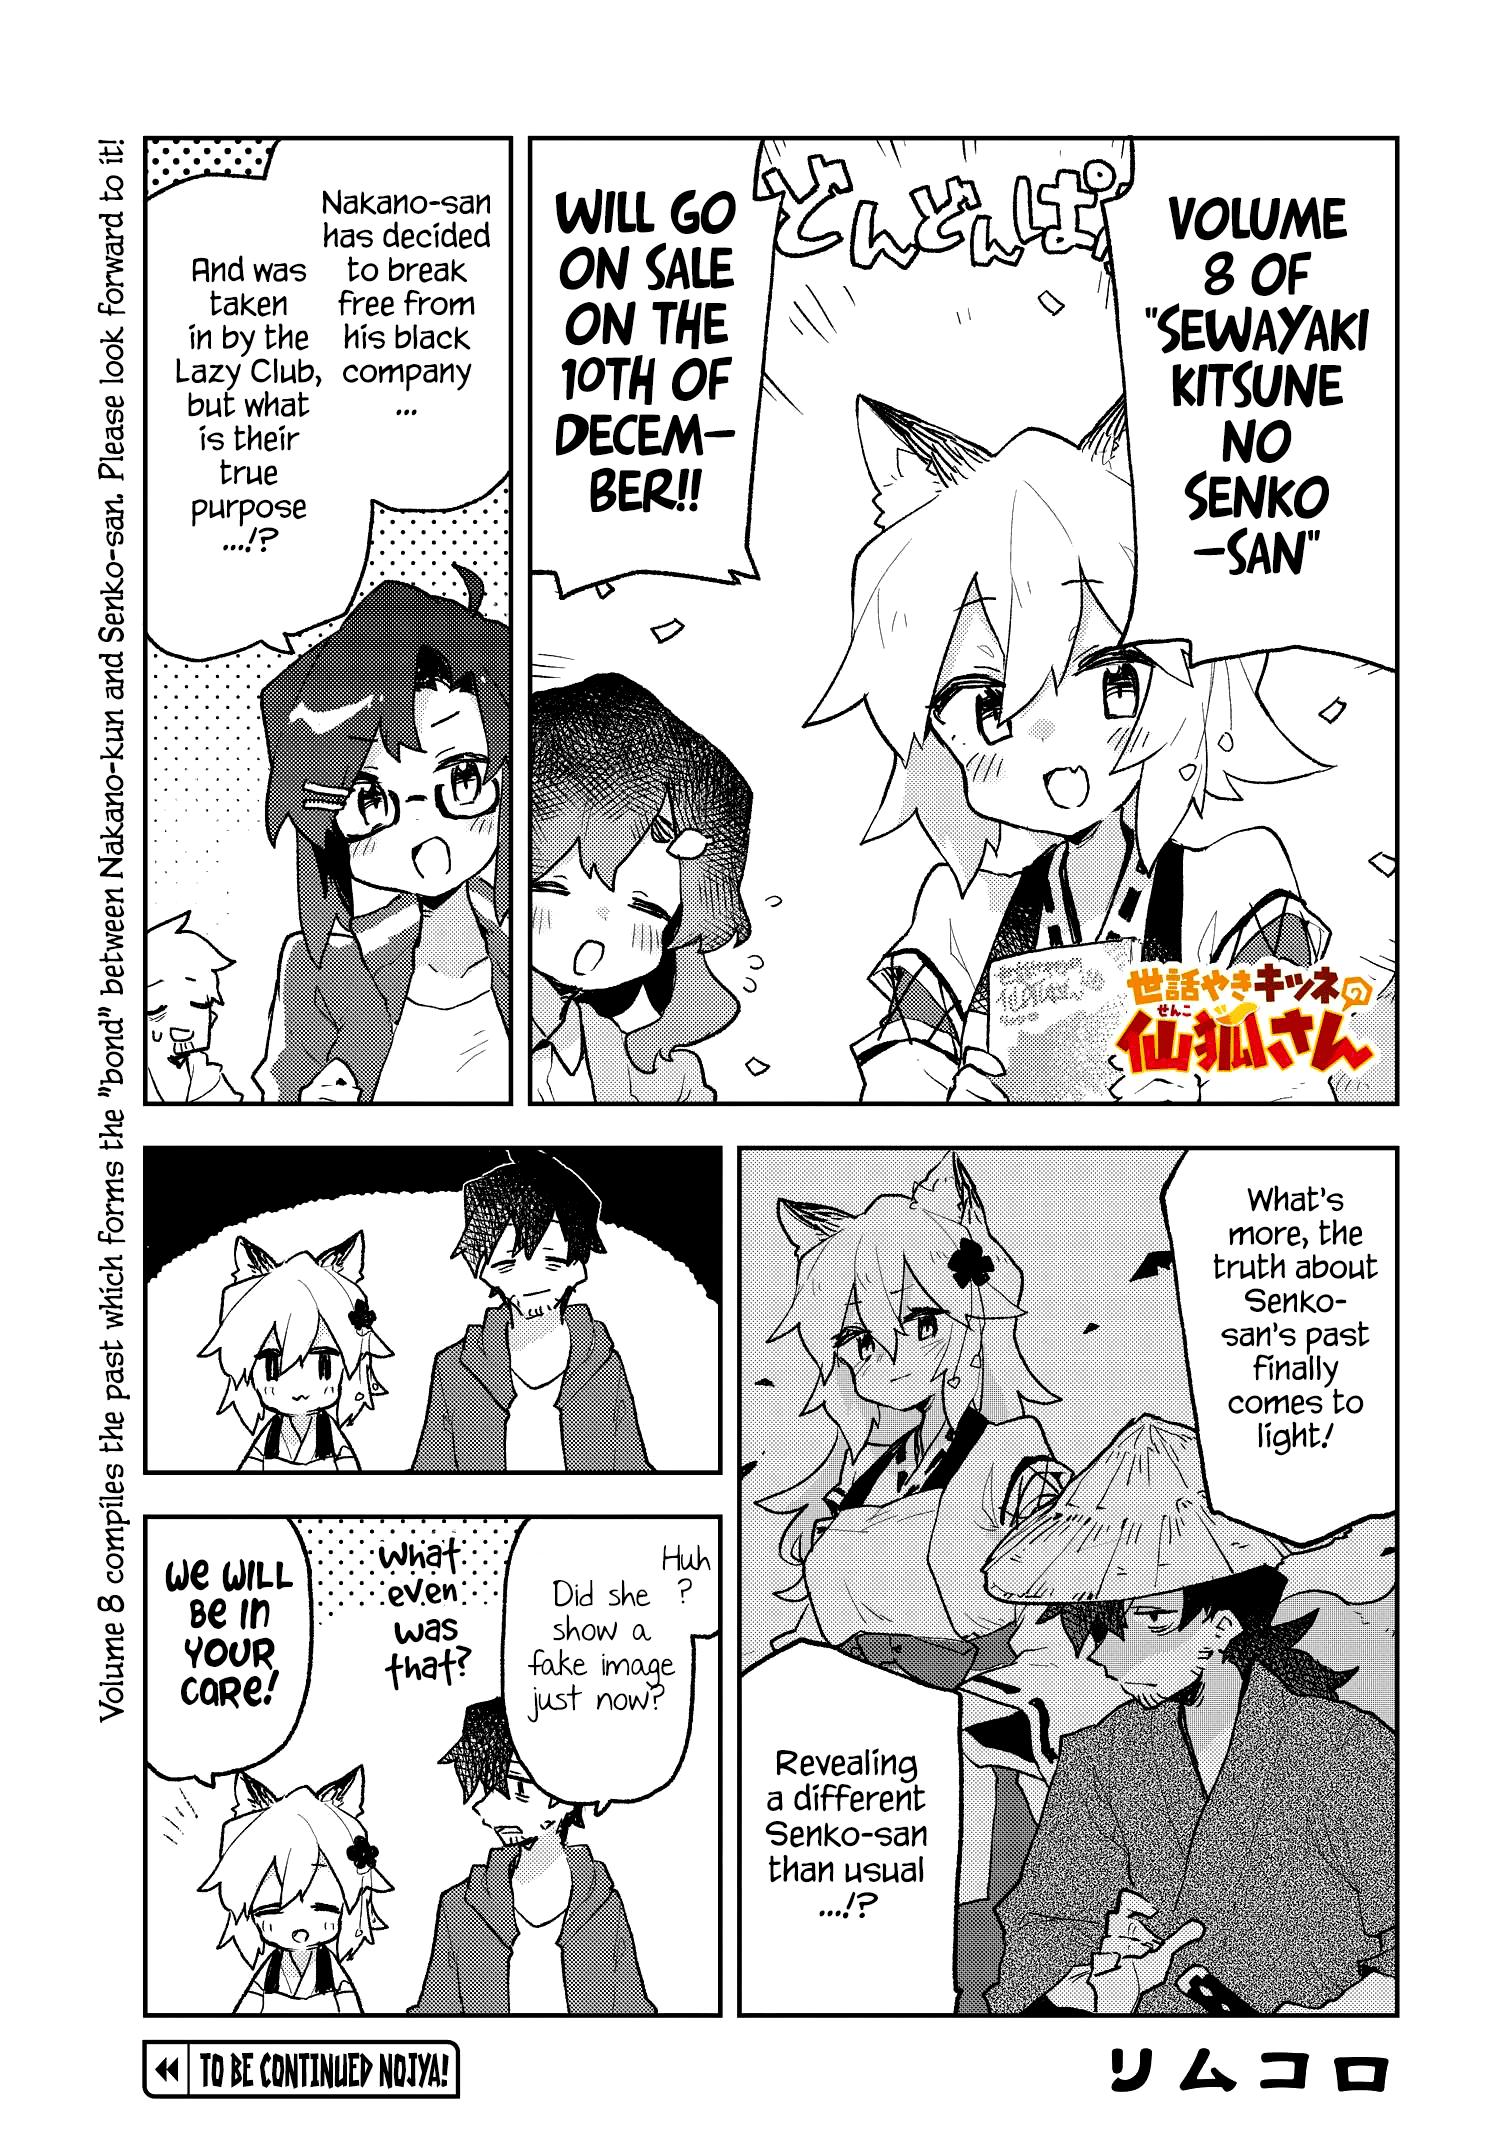 Sewayaki Kitsune No Senko-San Chapter 61.6: Volume 8 Announcement page 1 - Mangakakalot